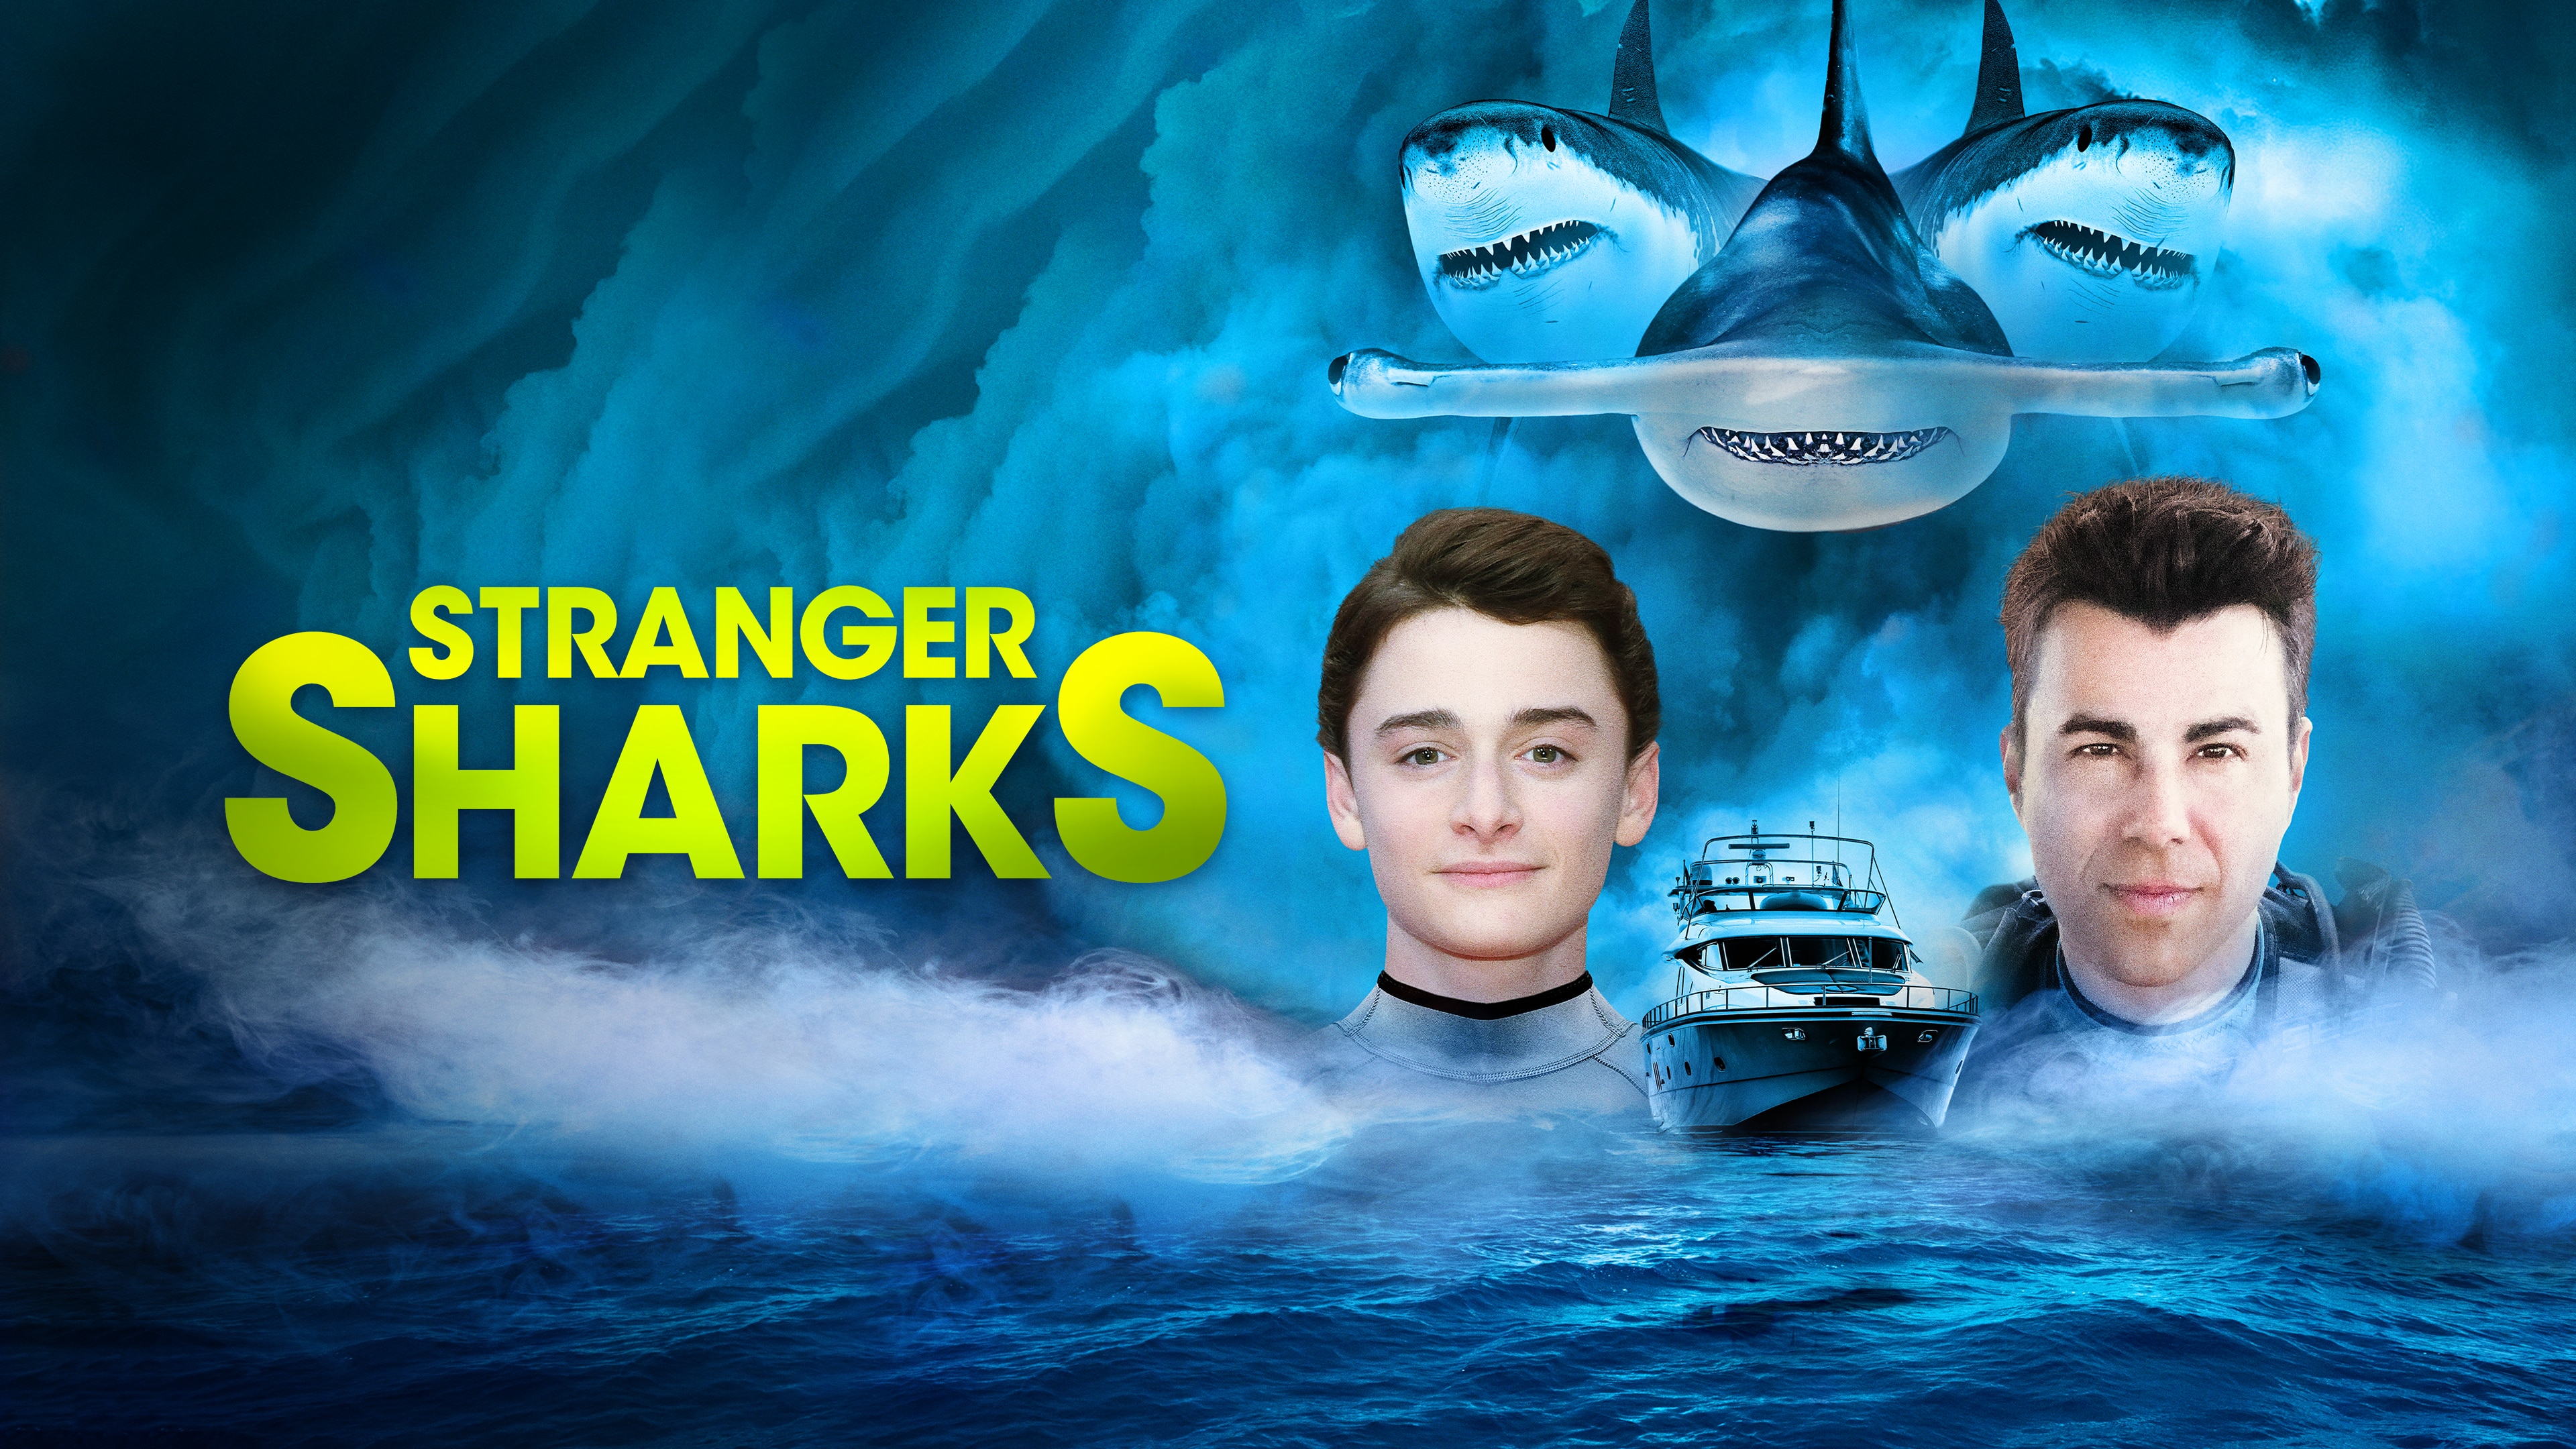 Great White Sharks Club on X: Stranger things season 5 poster concept art # StrangerThings #strangerthingsseason4 #StrangerThings4 #StrangerThings5  #FYP  / X